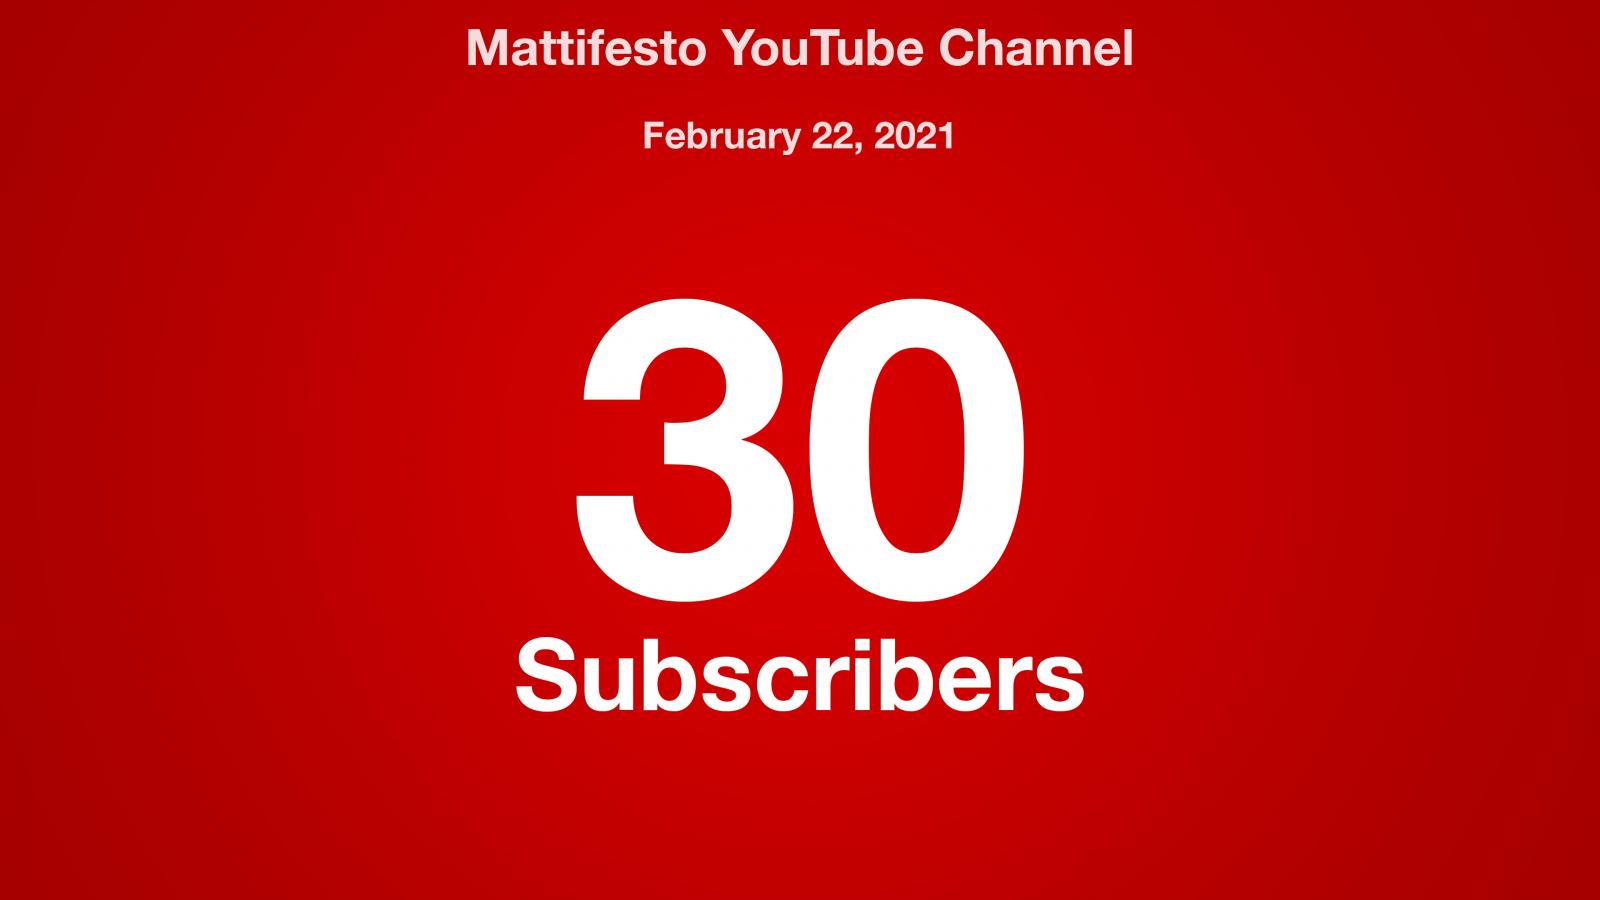 Mattifesto YouTube Channel, February 22, 2021, 30 Subscribers